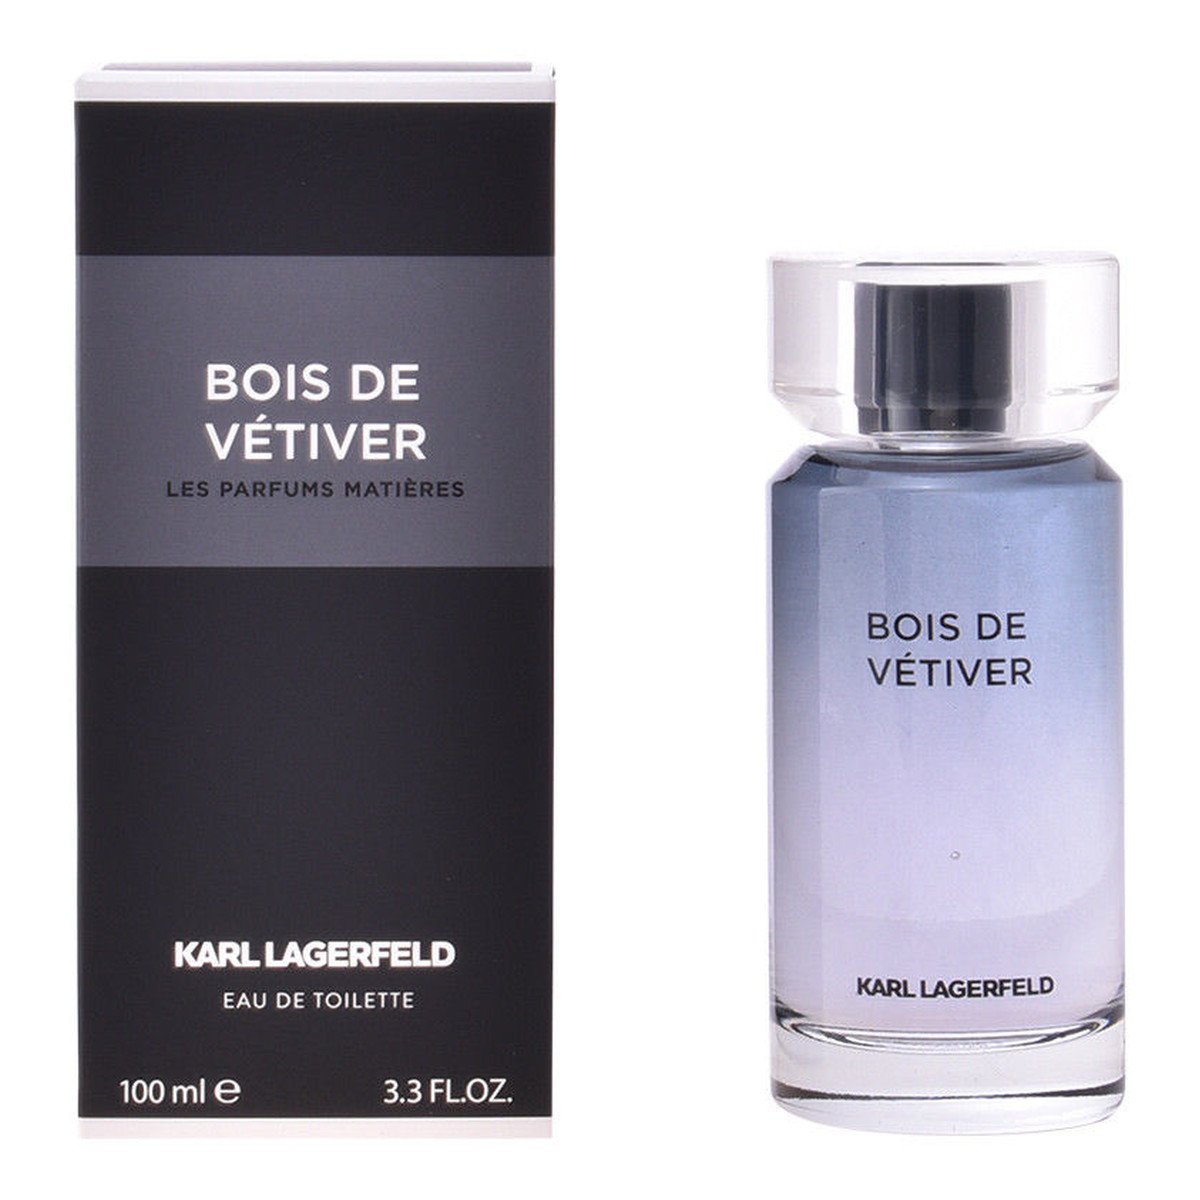 Karl Lagerfeld Bois De Vetiver Les Parfums Matieres woda toaletowa 100ml